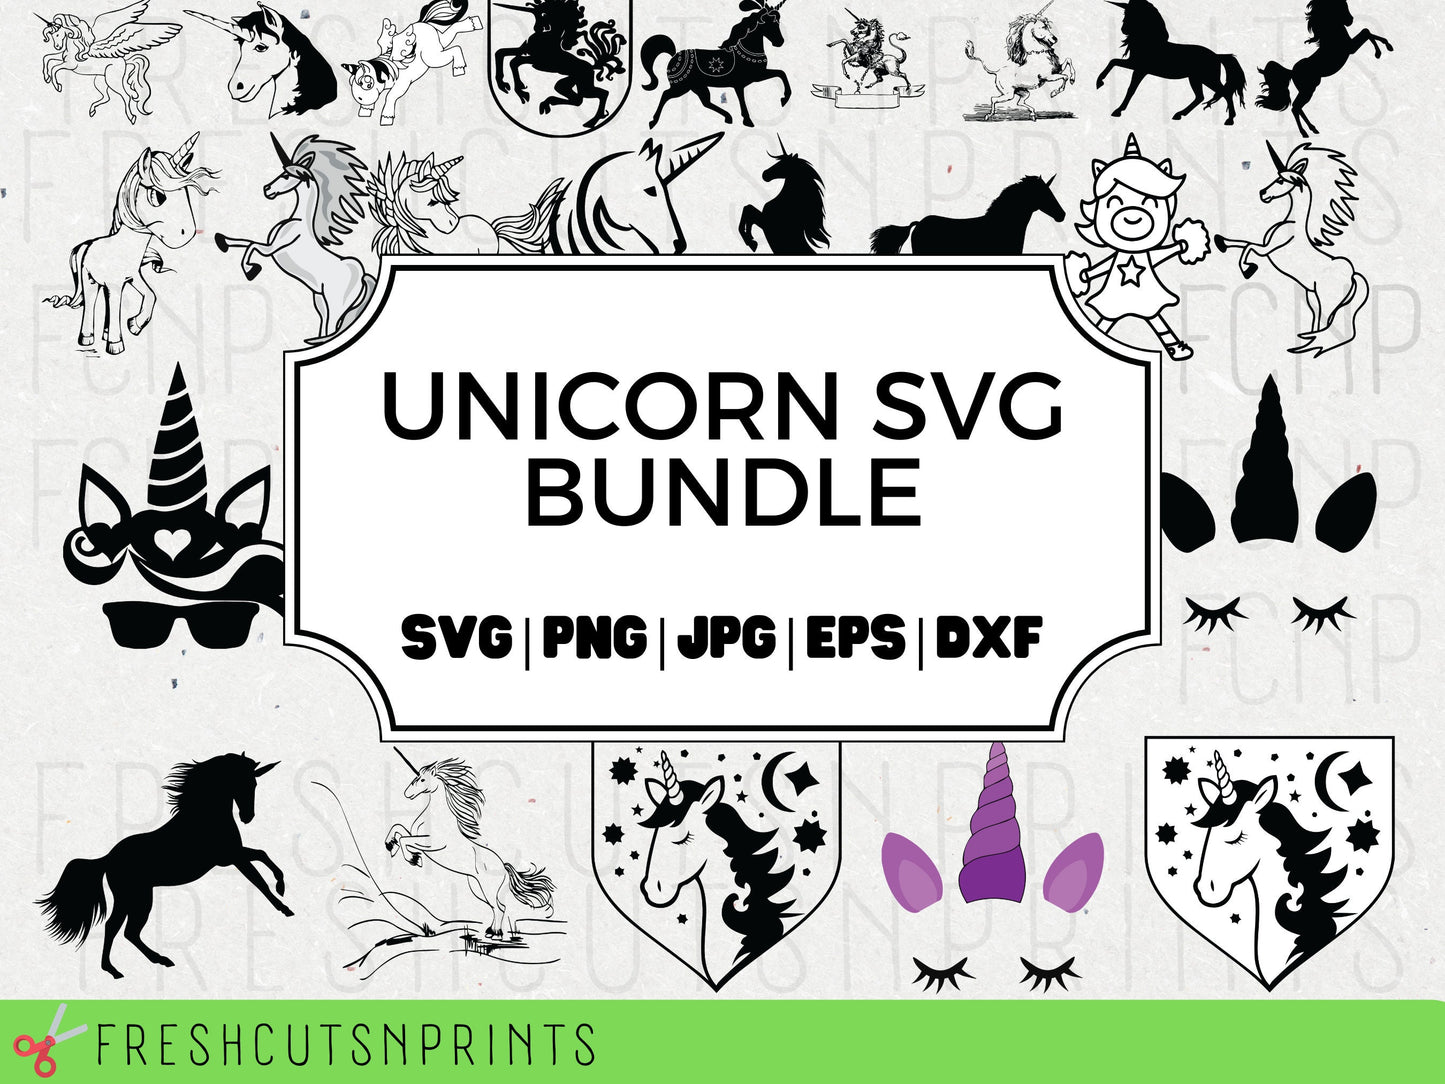 89+ Unicorn SVG Bundle , Unicorn clipart, unicorn file, Unicorn Silhouette, Unicorn svg, Unicorn Design, Unicorn for Cricut, Unicorn files